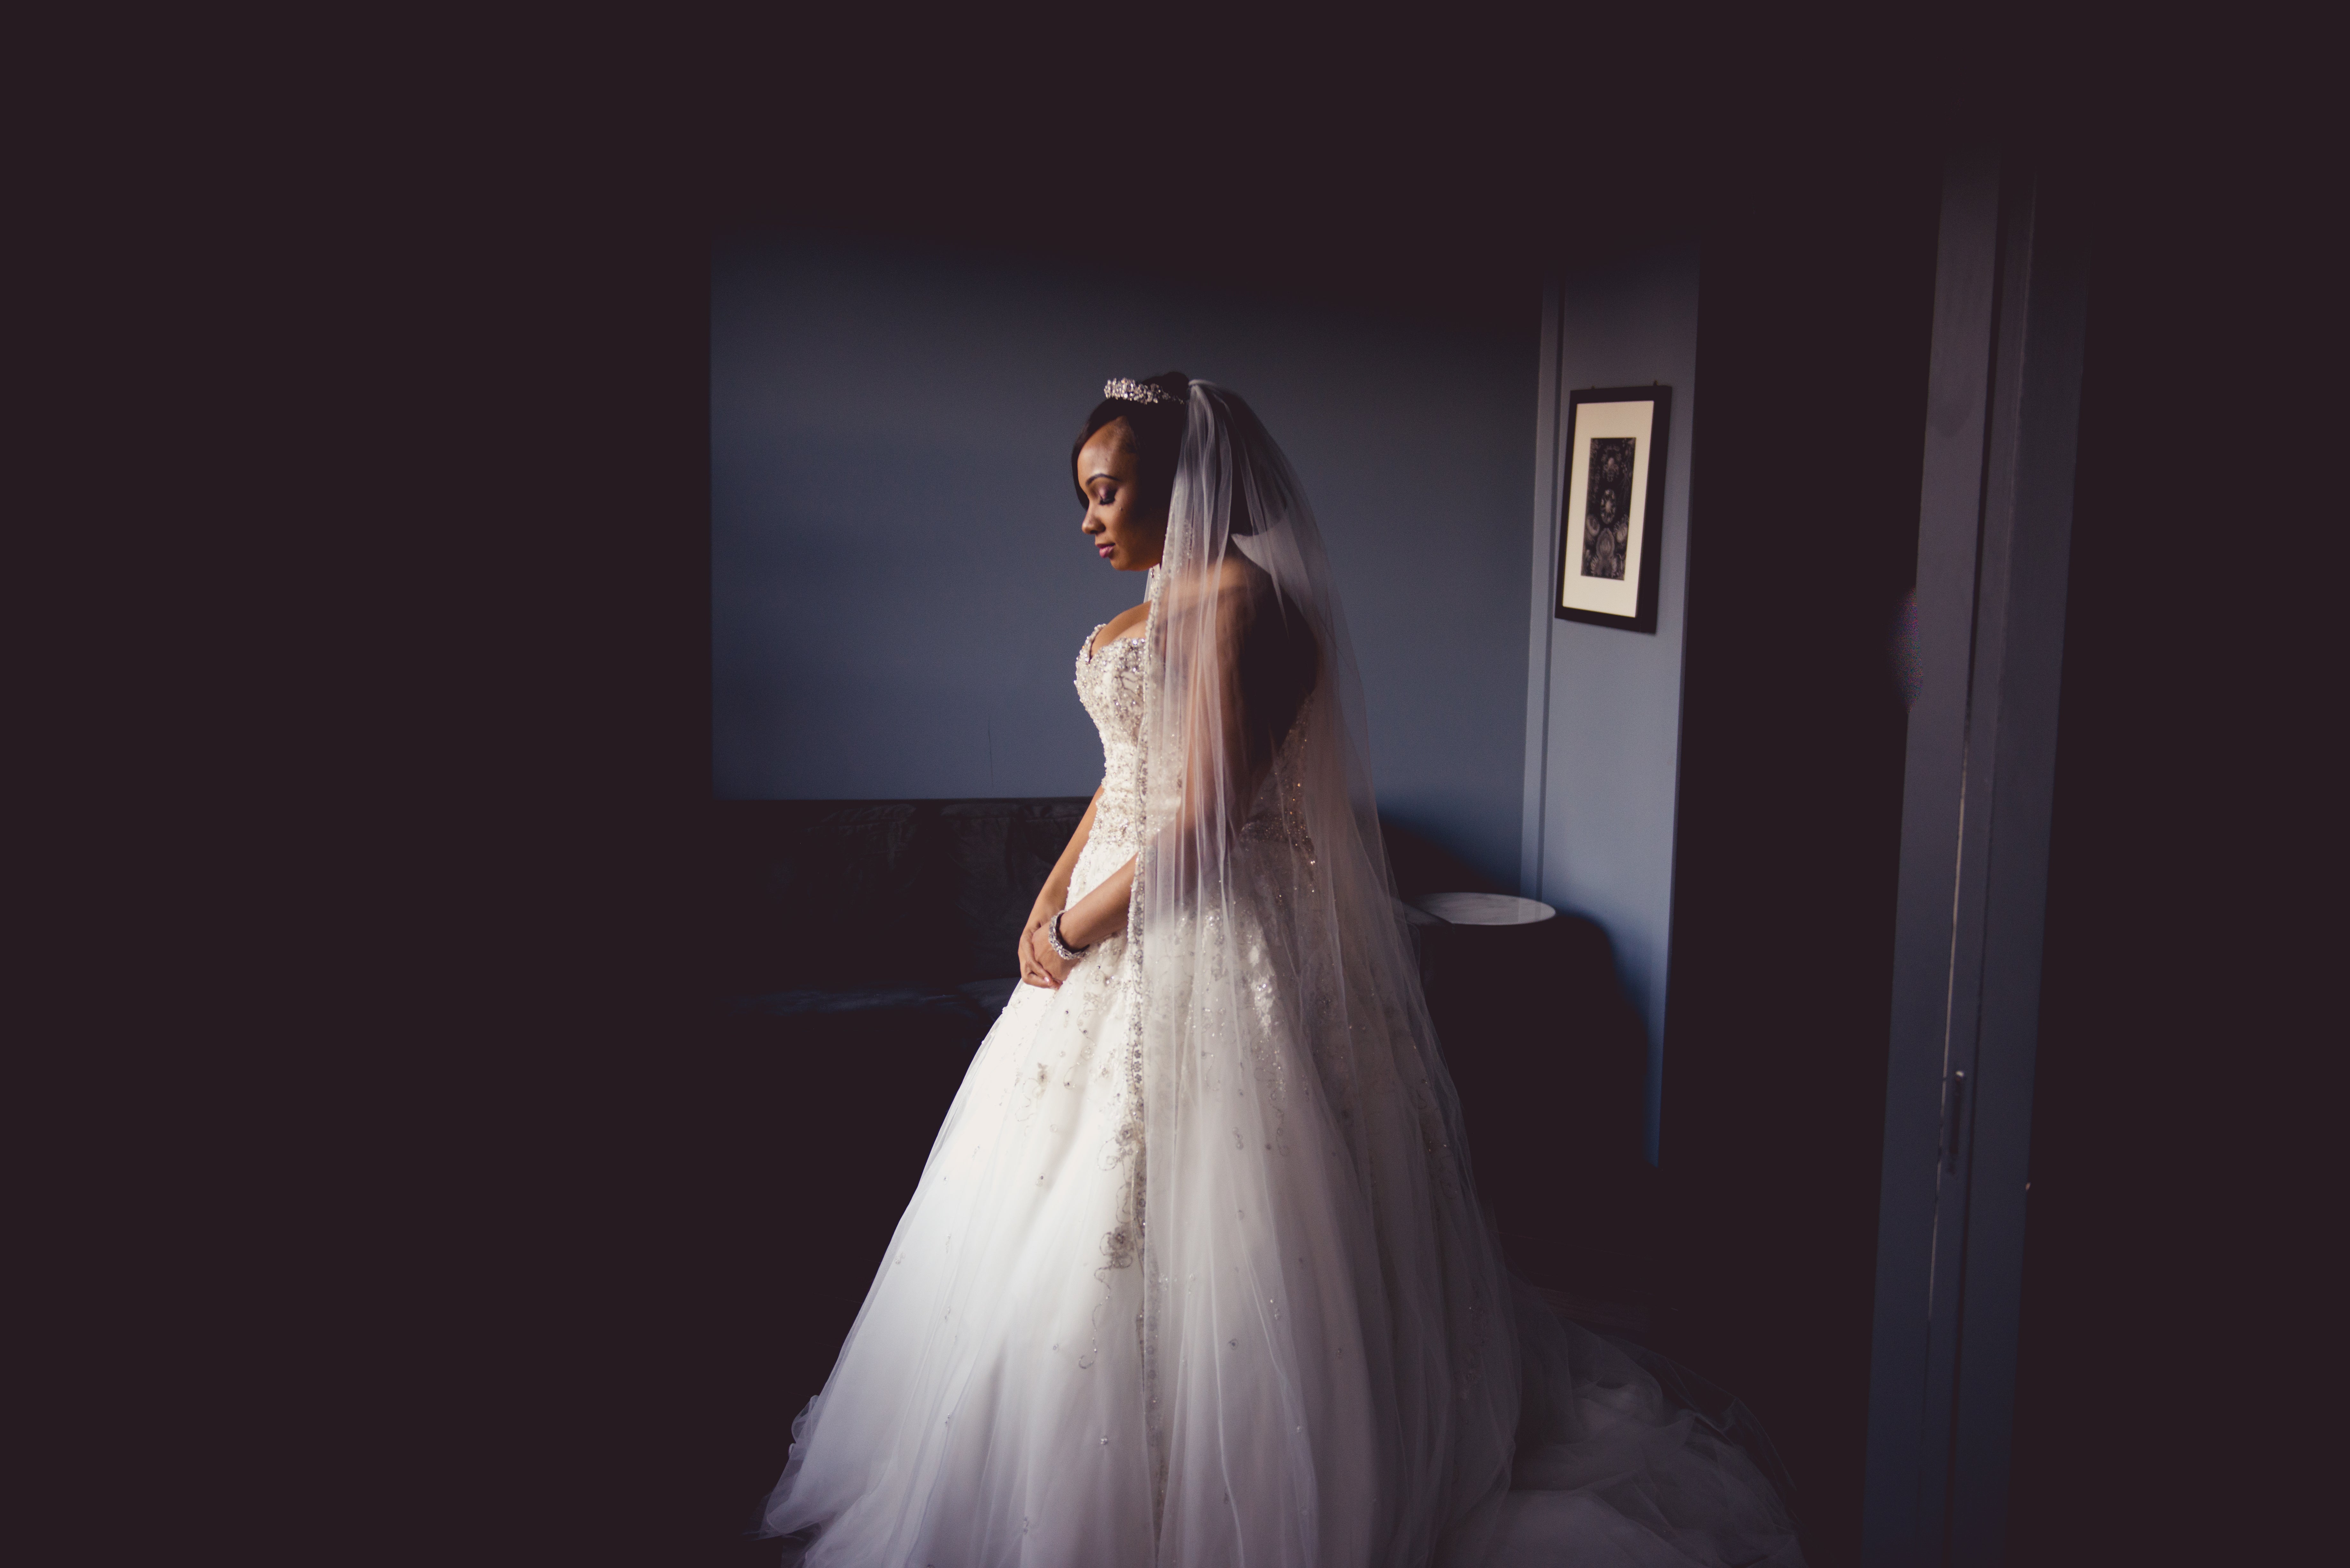 Bridal Bliss: Daniel And Natasha's Glam Wedding Was So Lit
